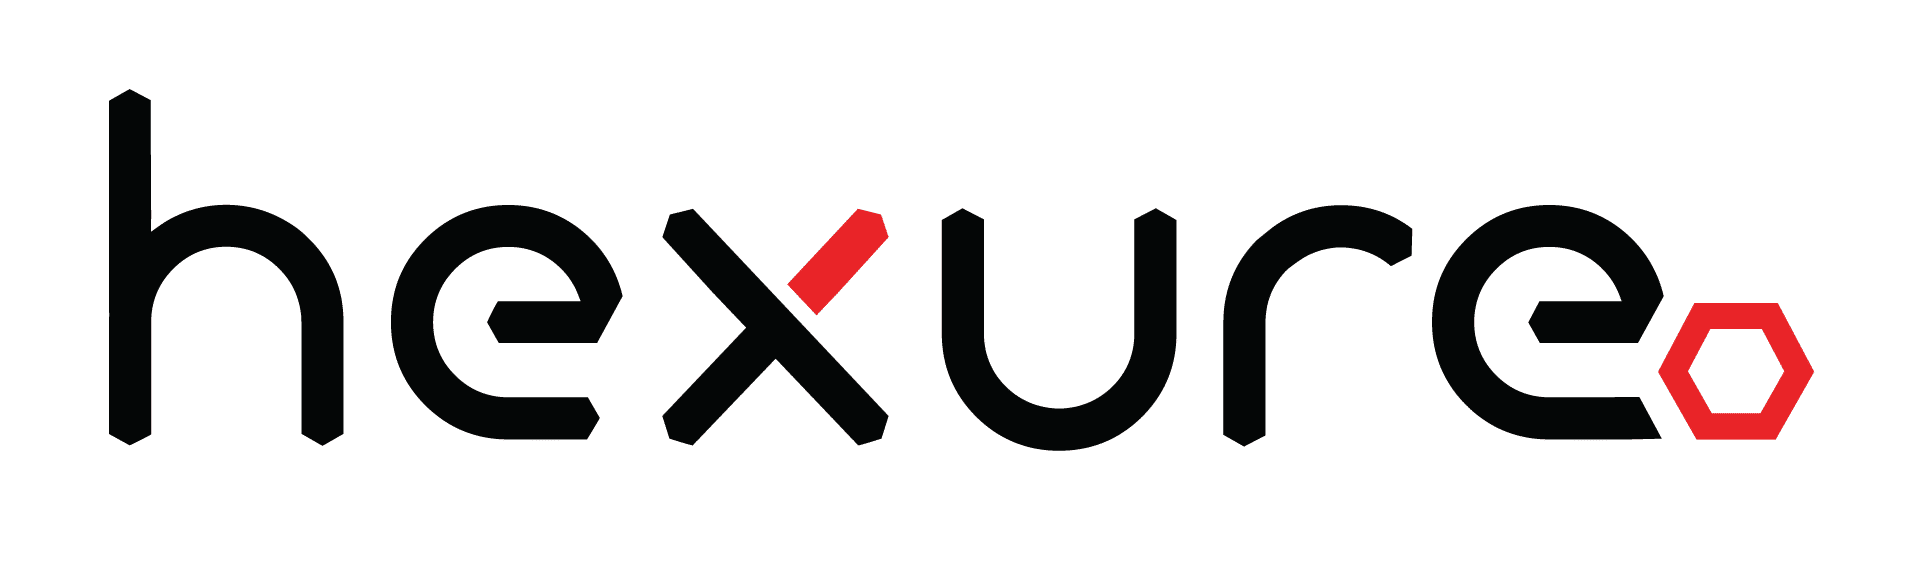 Hexure - Crunchbase Company Profile & Funding